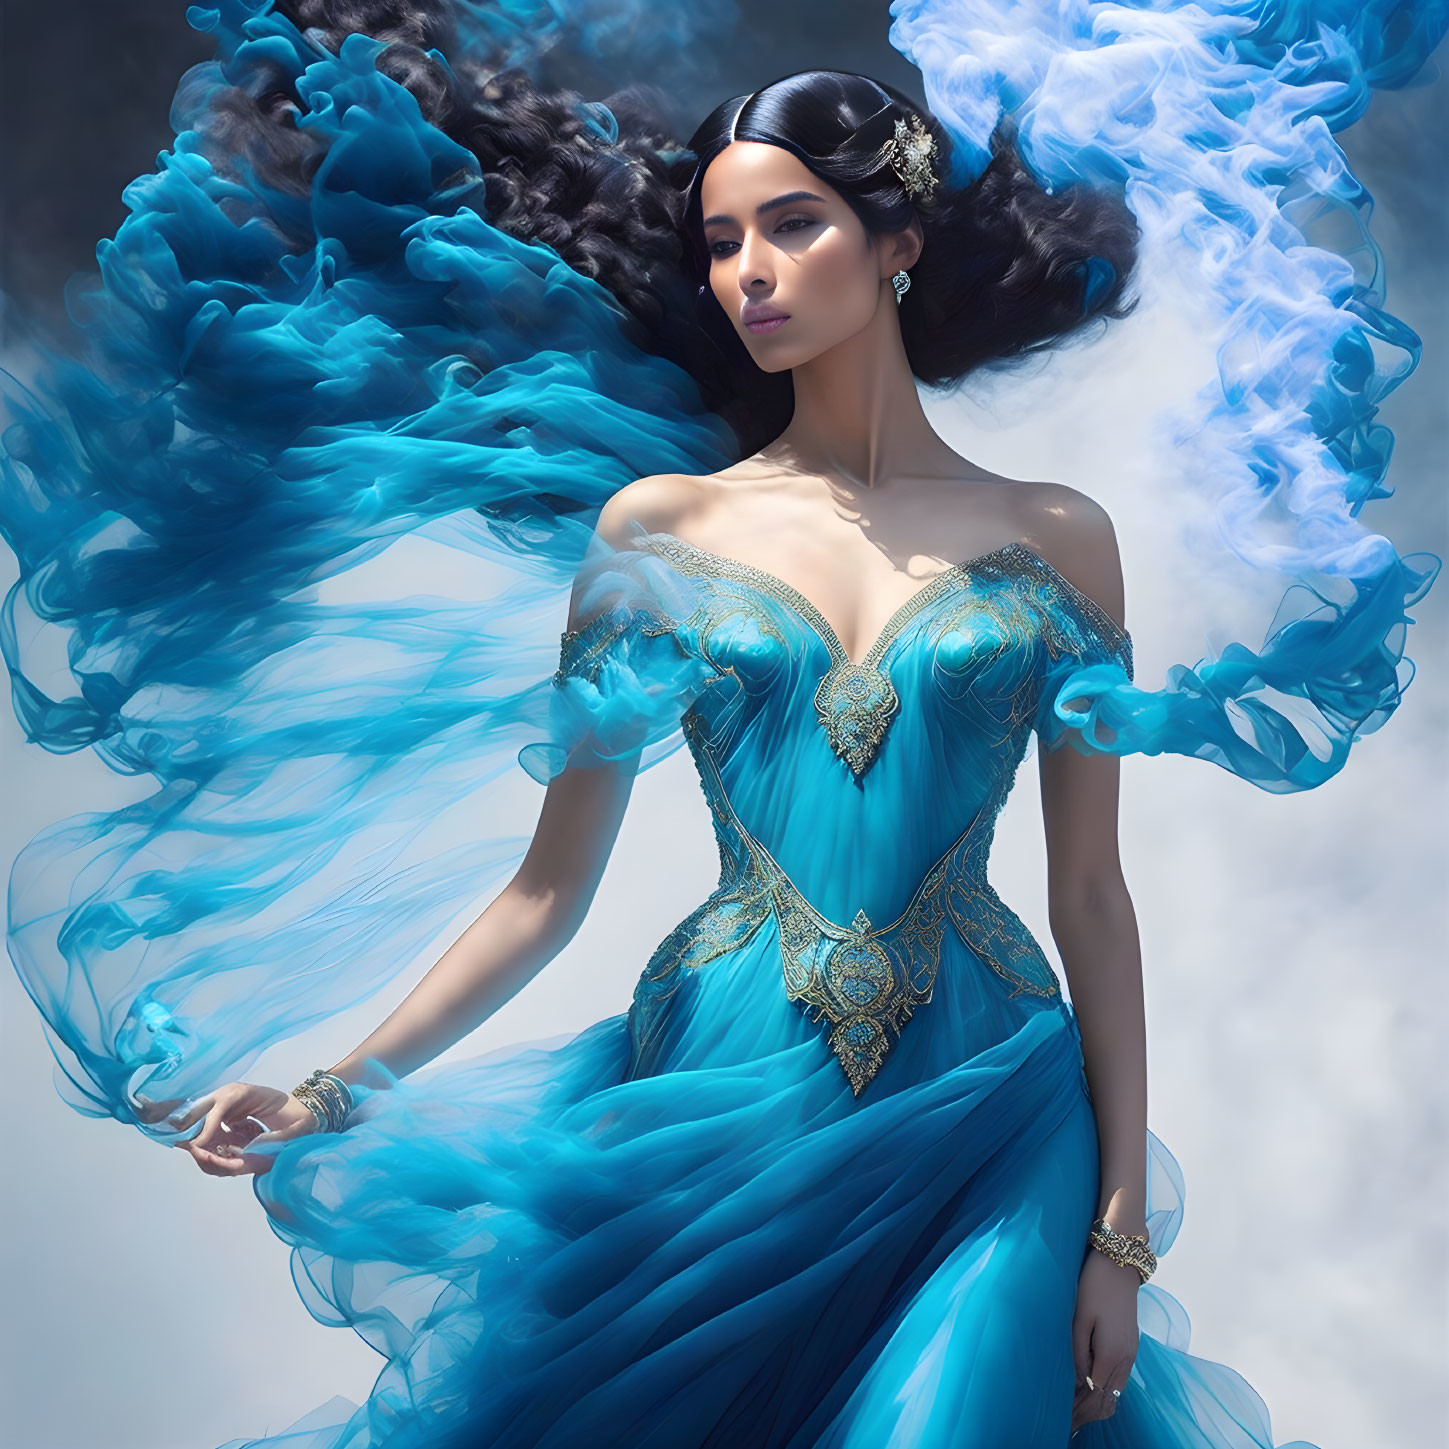 Dancing goddess in blue smoke.